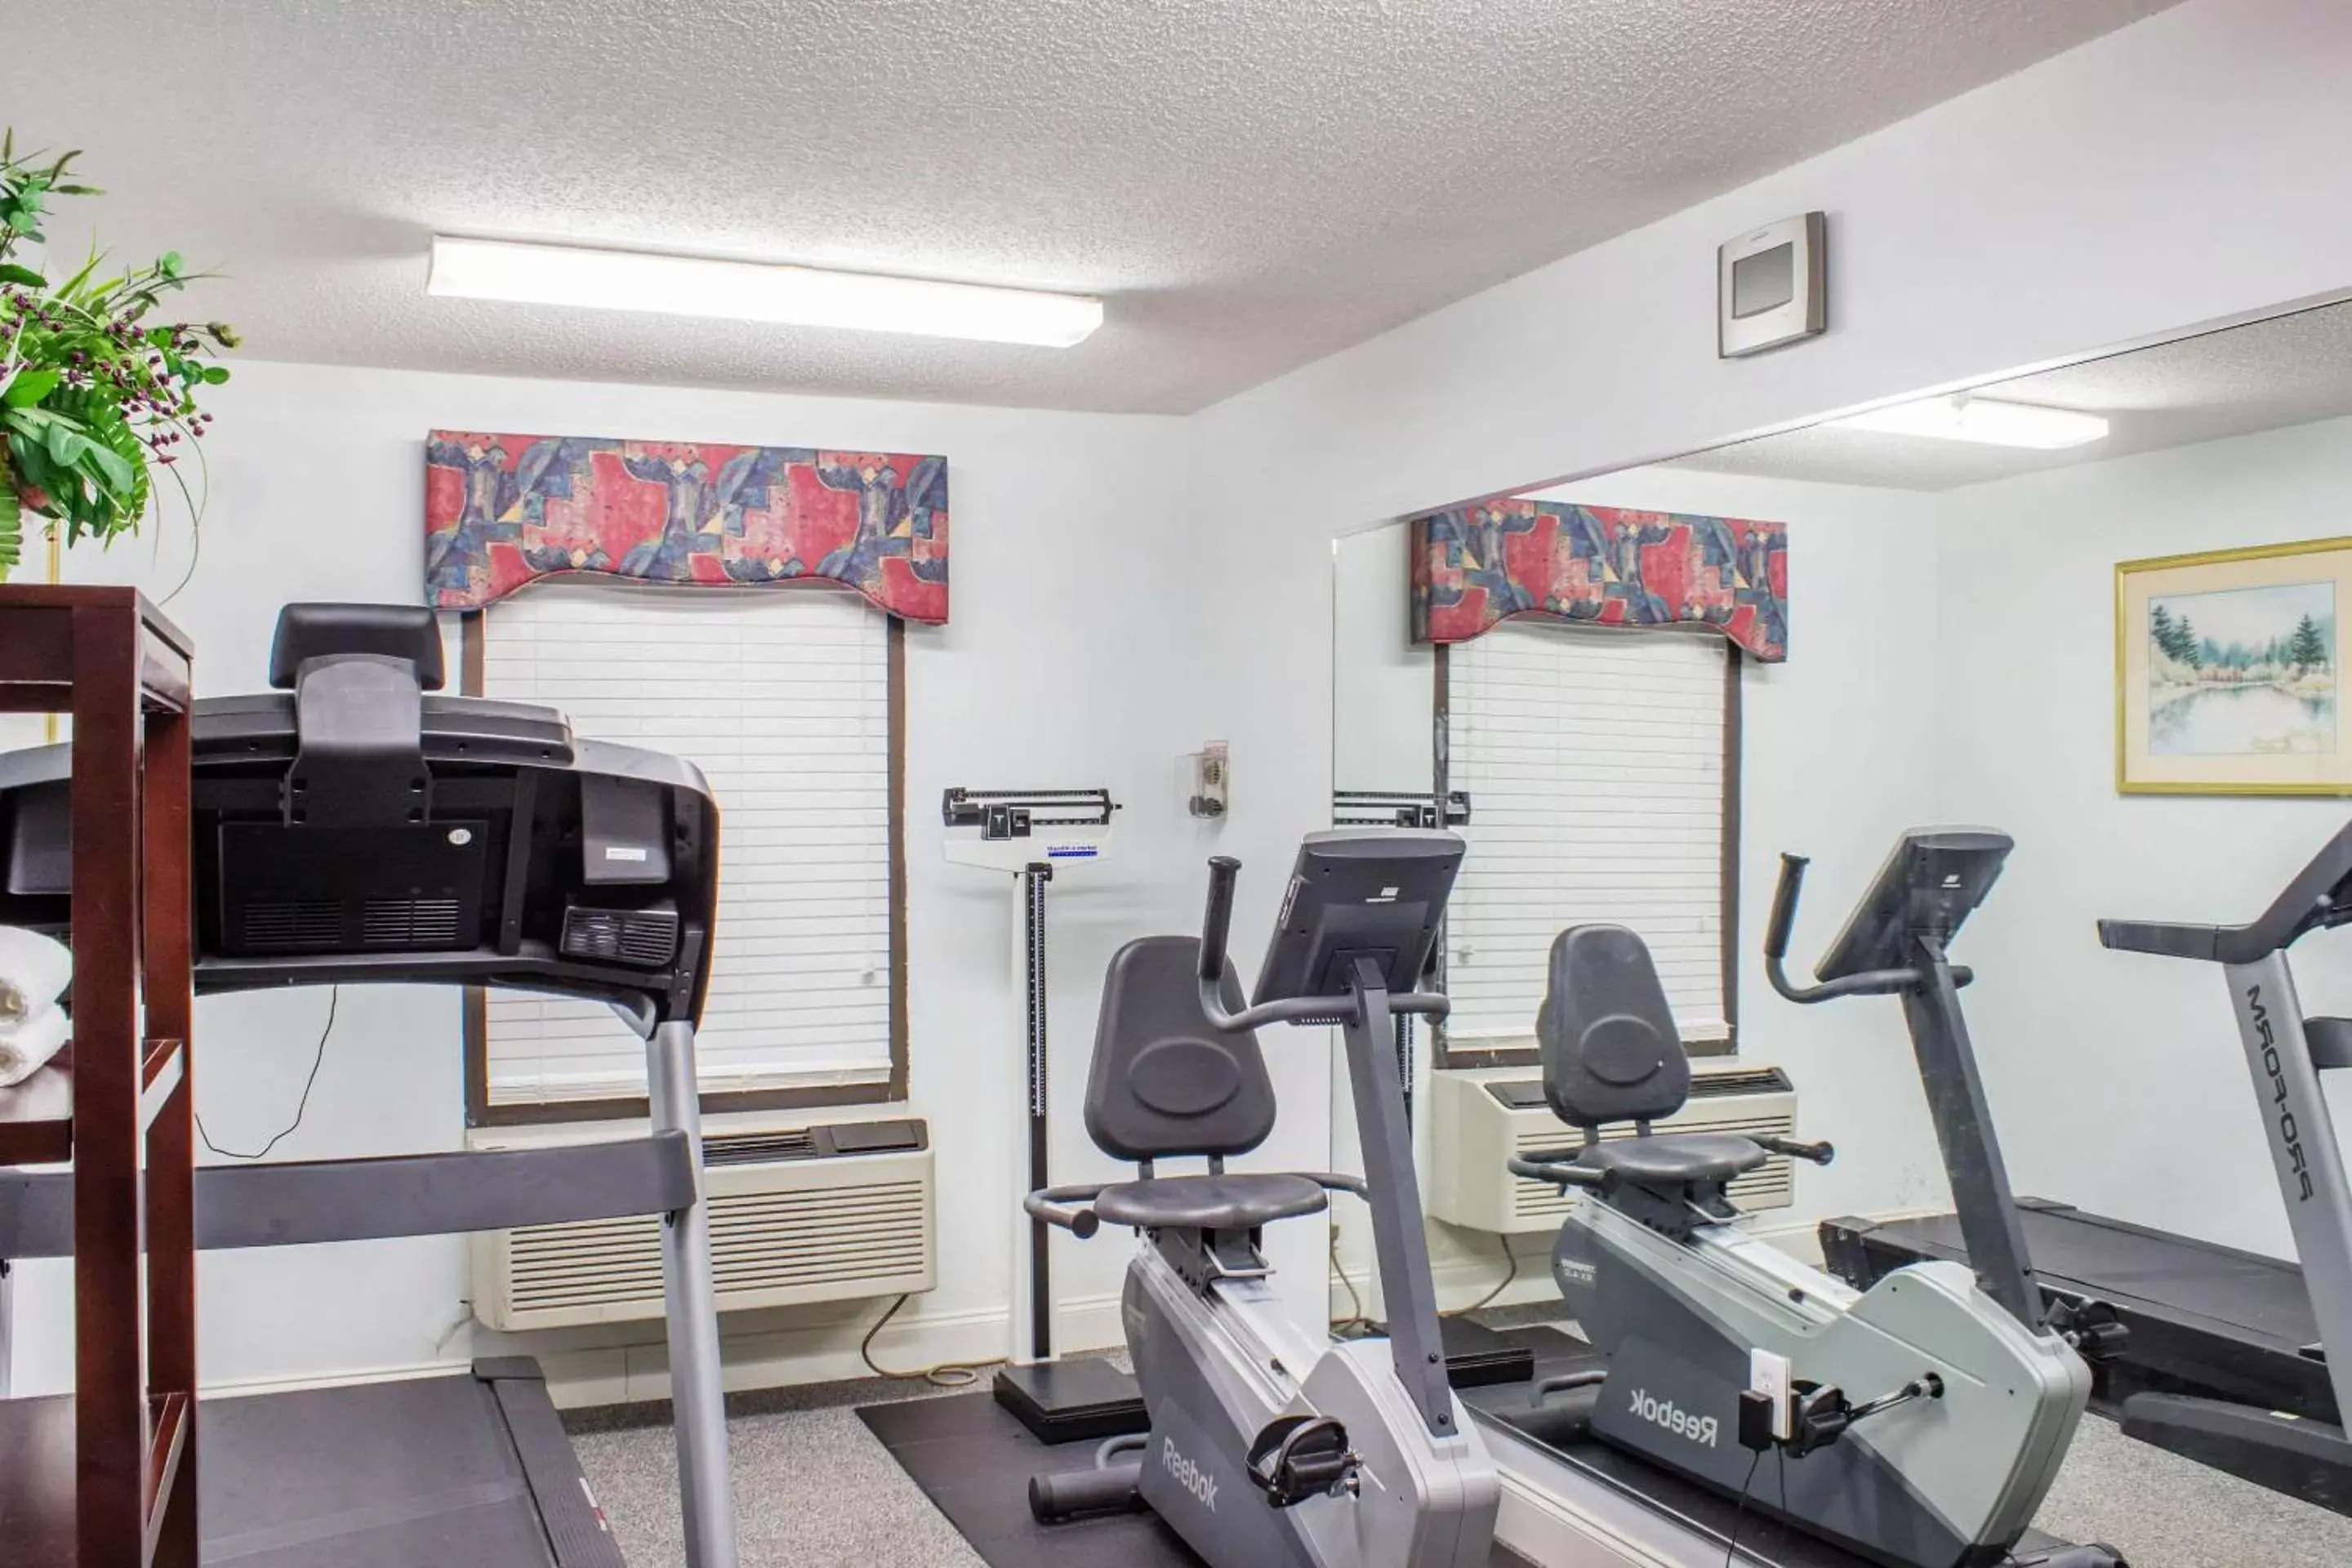 Fitness centre/facilities, Fitness Center/Facilities in Econo Lodge Raleigh near Walnut Creek Amphitheatre